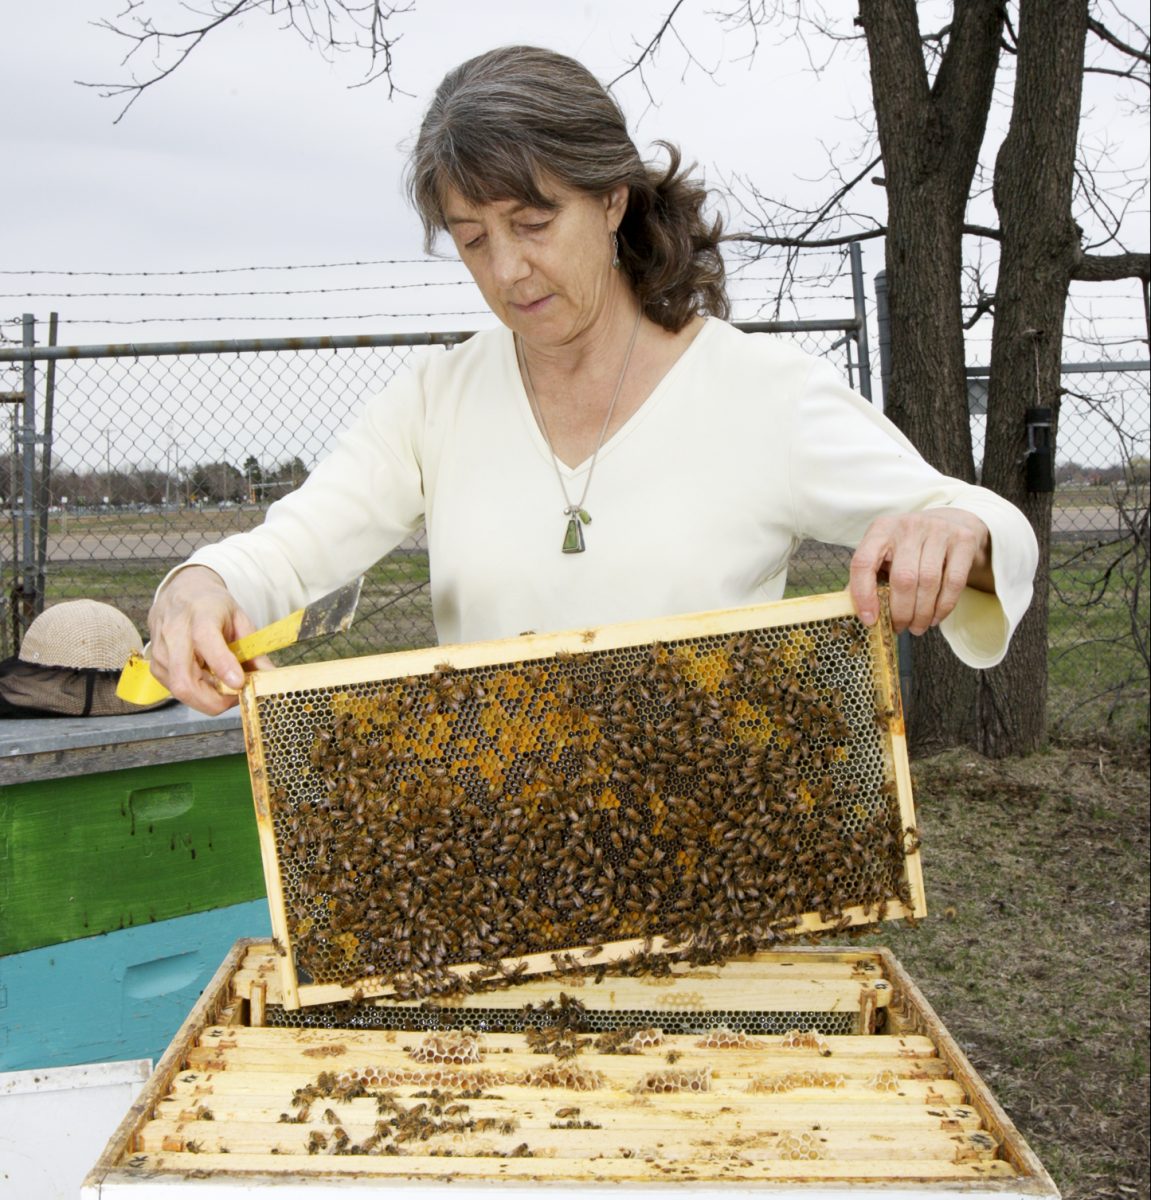 Spivak working with honeybees in 2015.